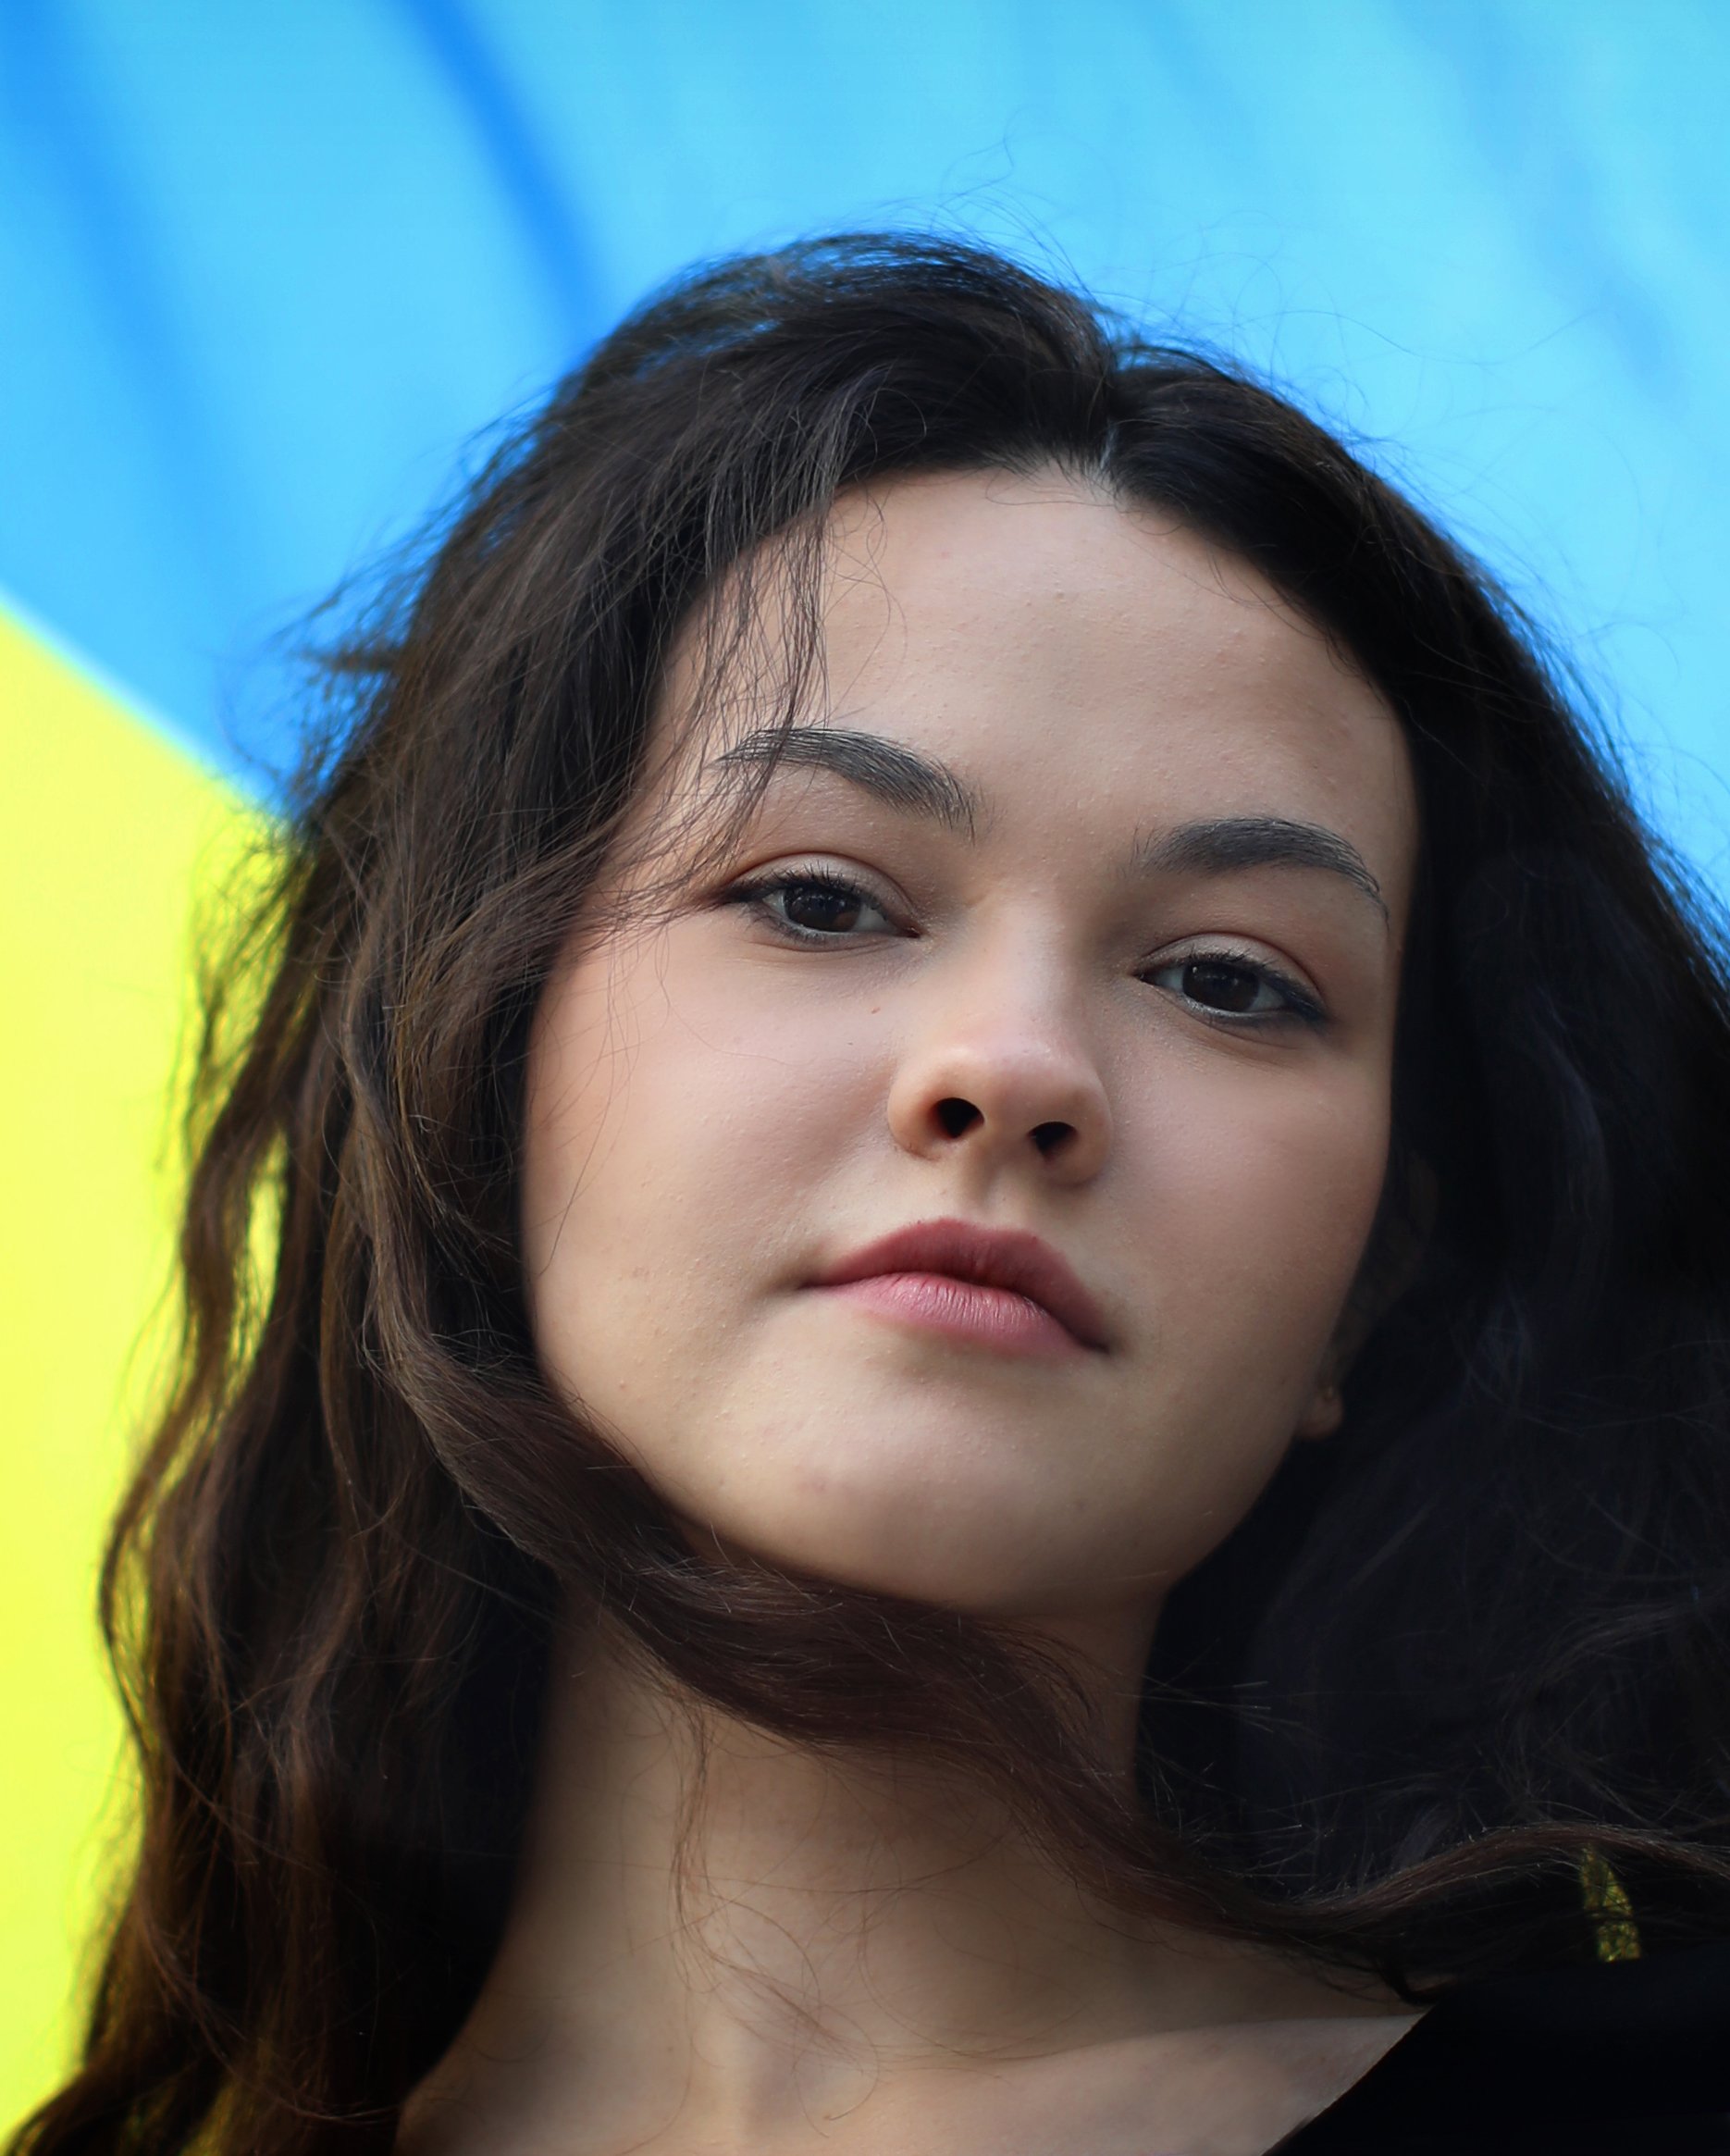 Sonia - Student, Artist, Ukrainian Freedom Activist